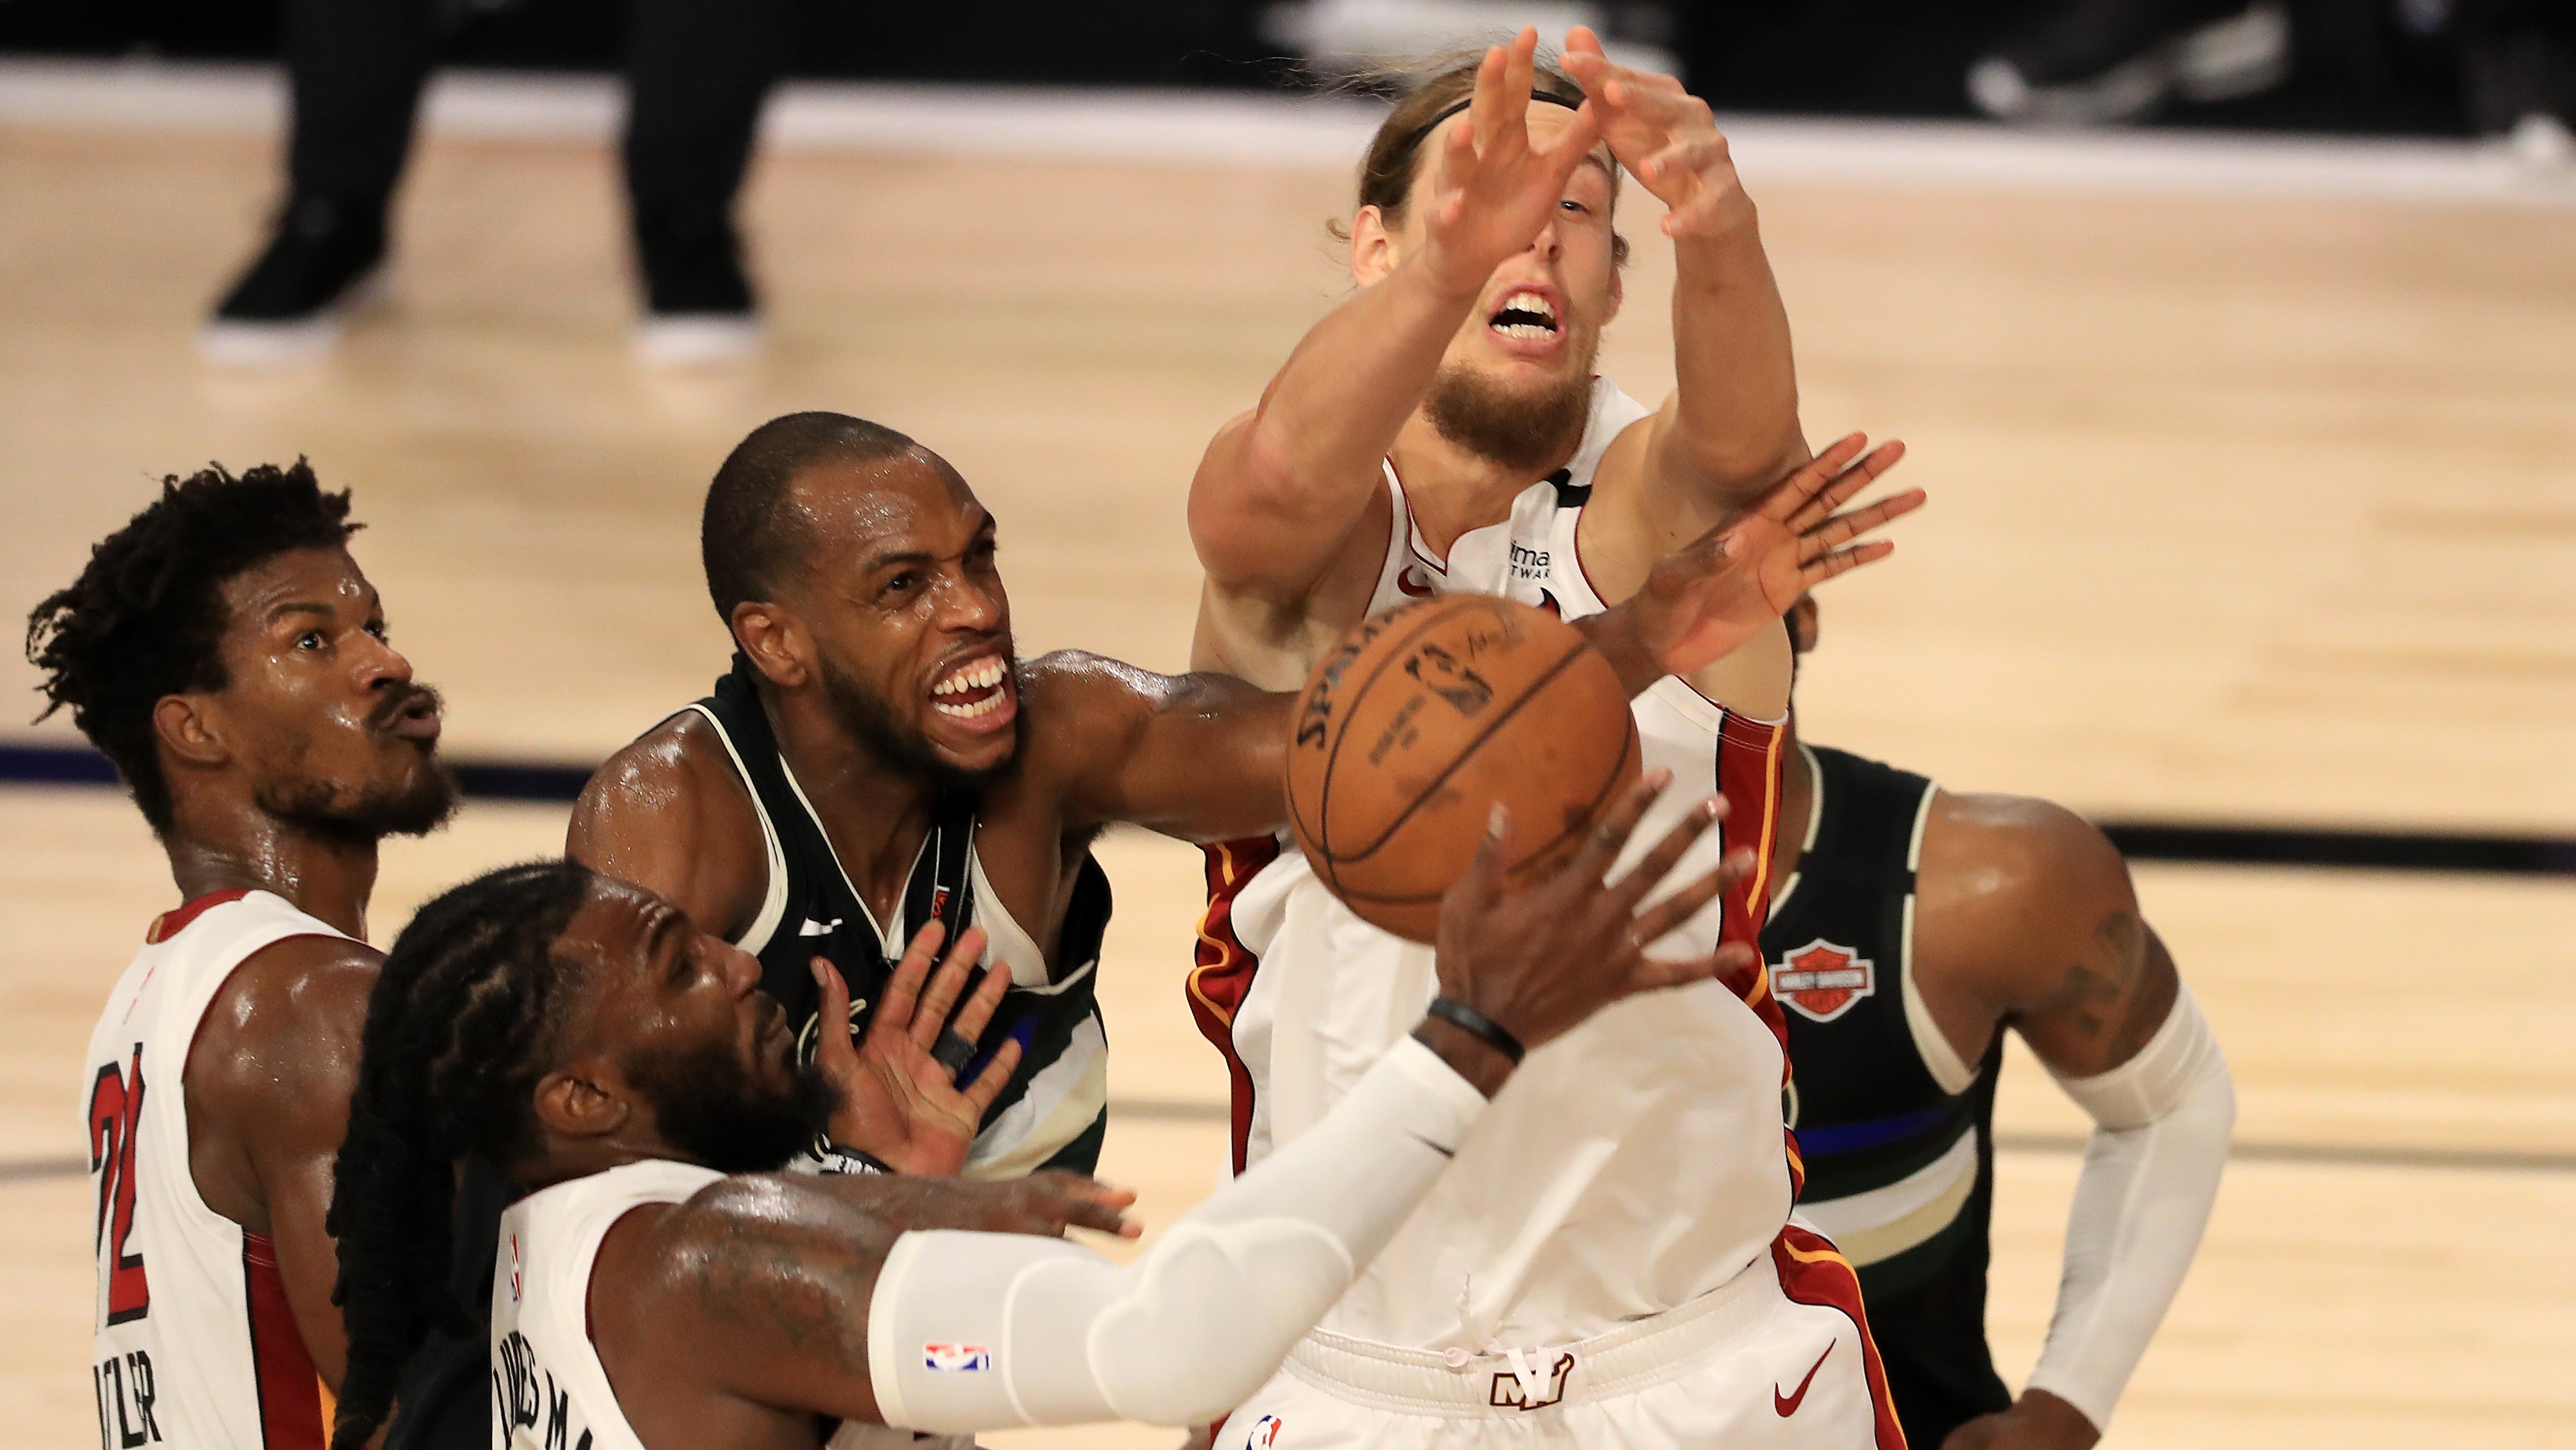 Bucks vs Heat live stream: how to watch game 4 of the NBA playoff semi